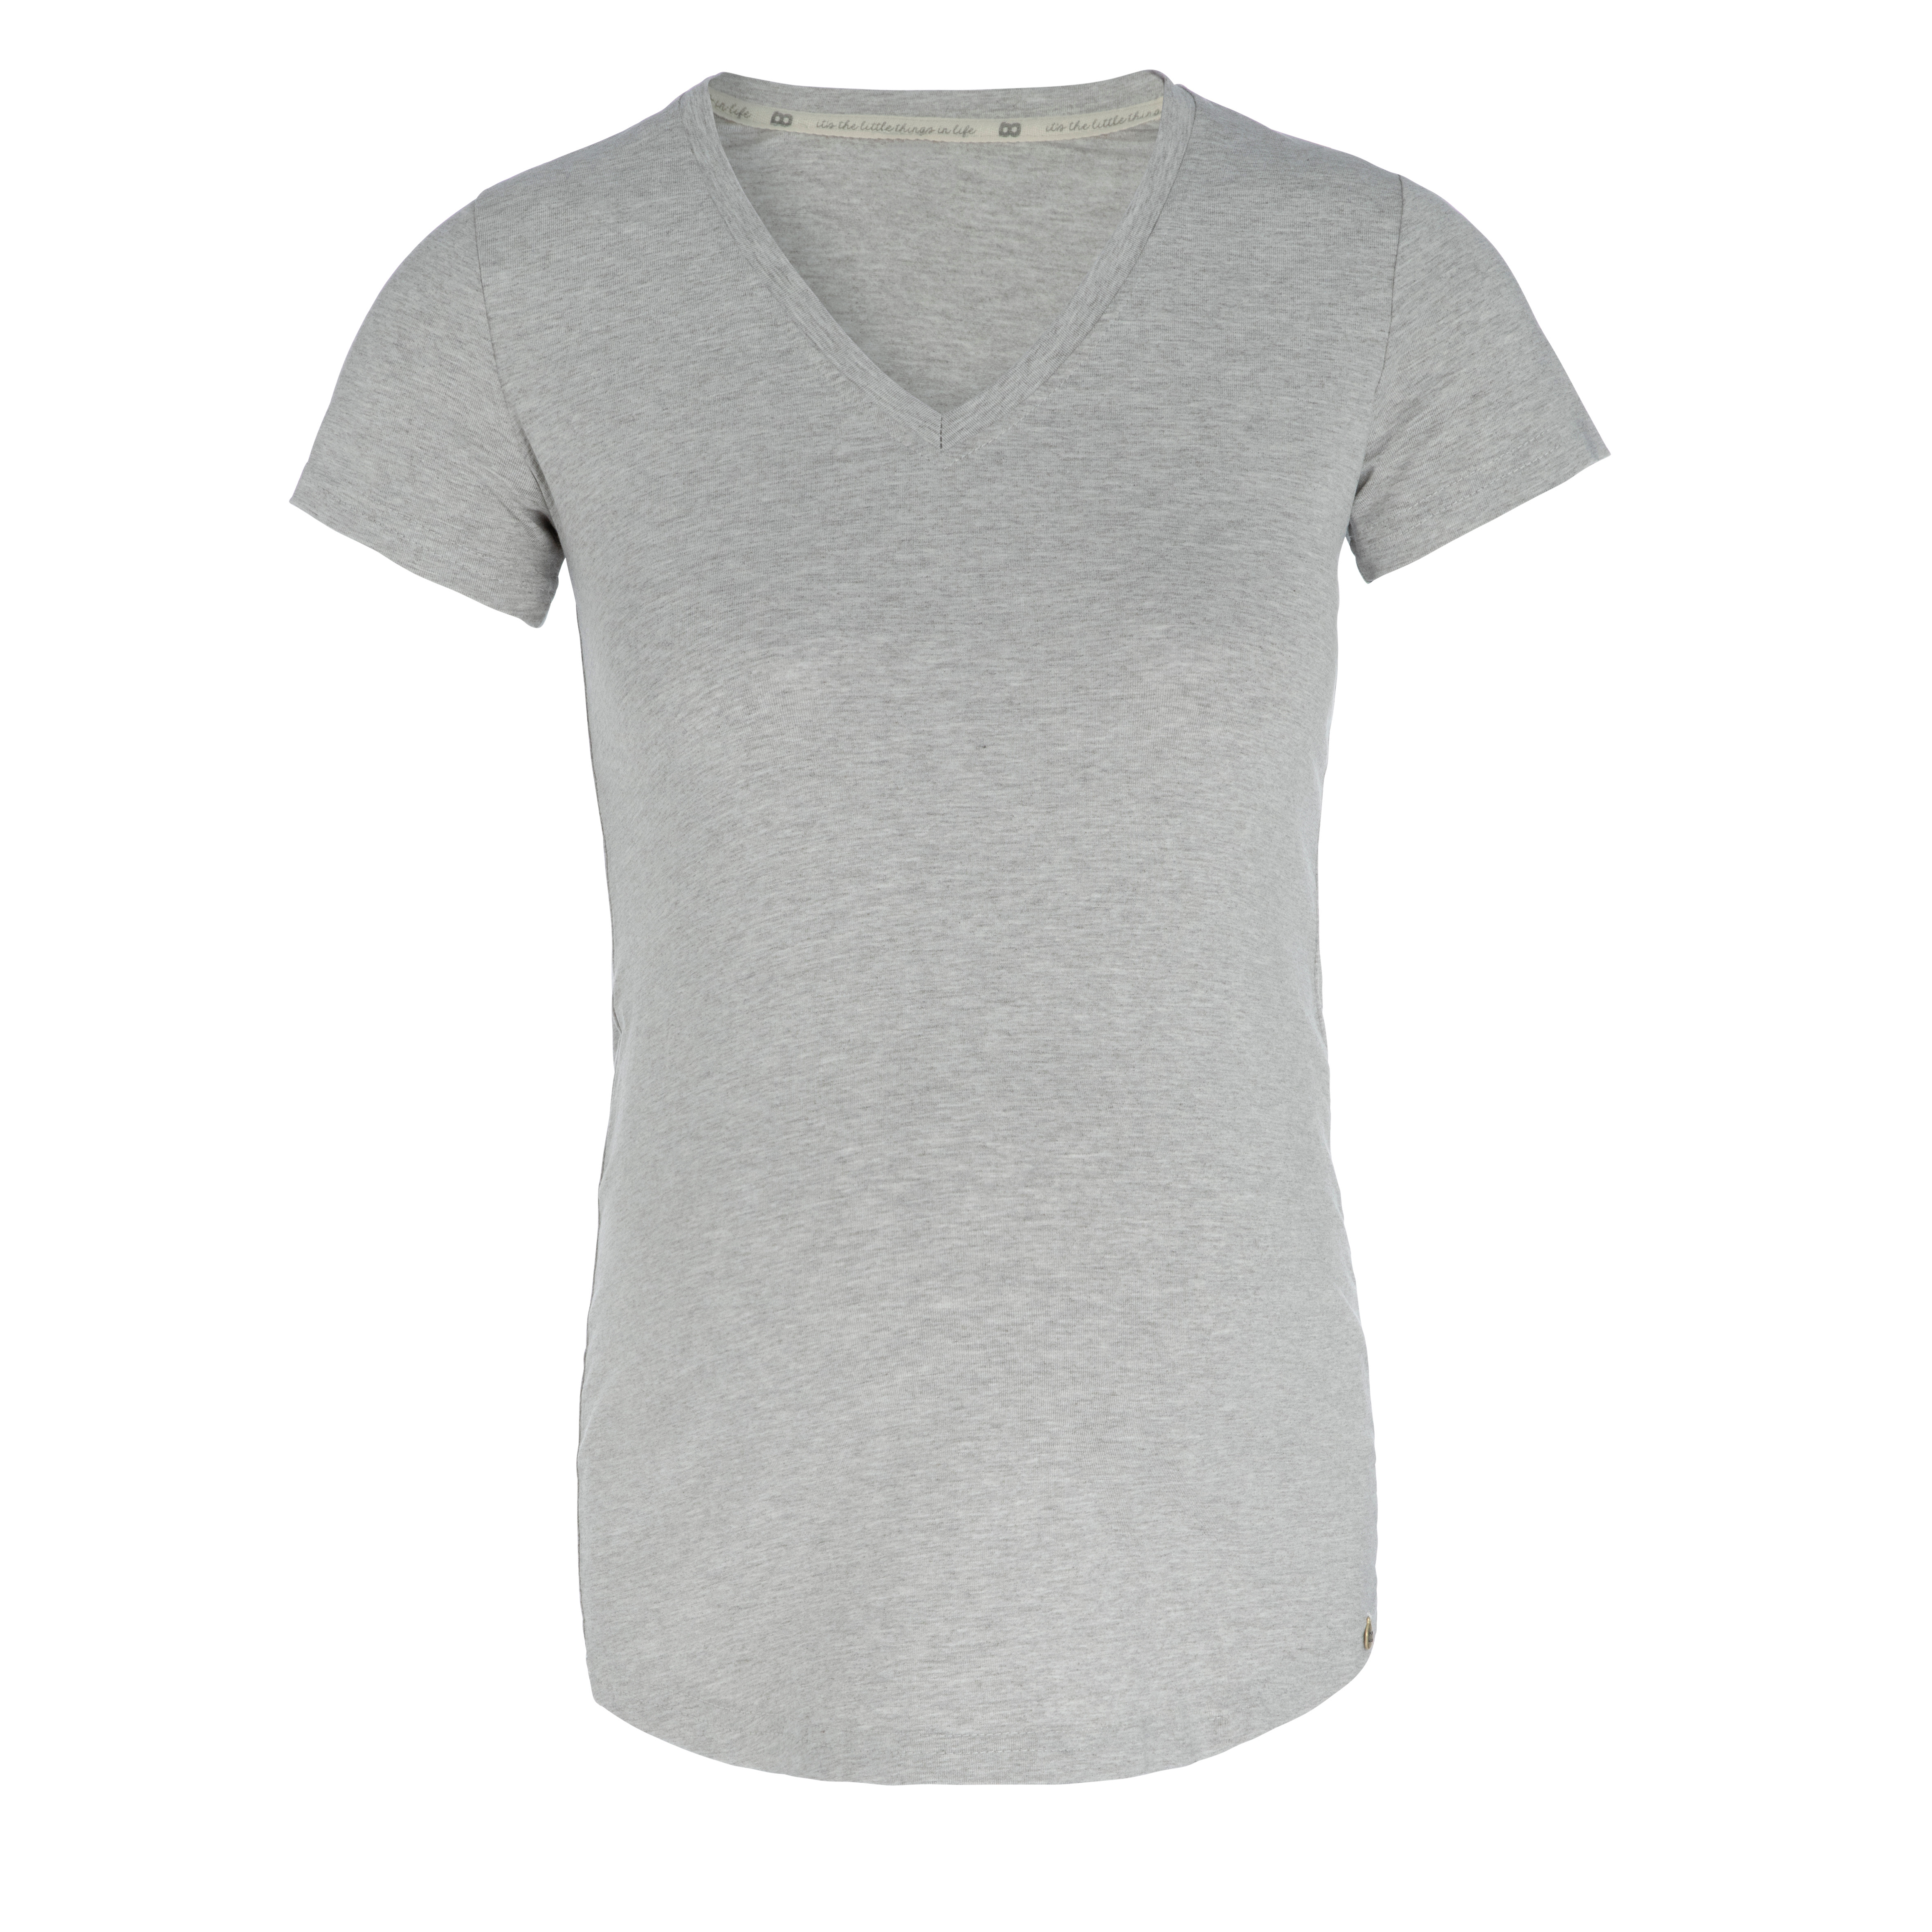 Maternity T-shirt Glow dusty grey - M